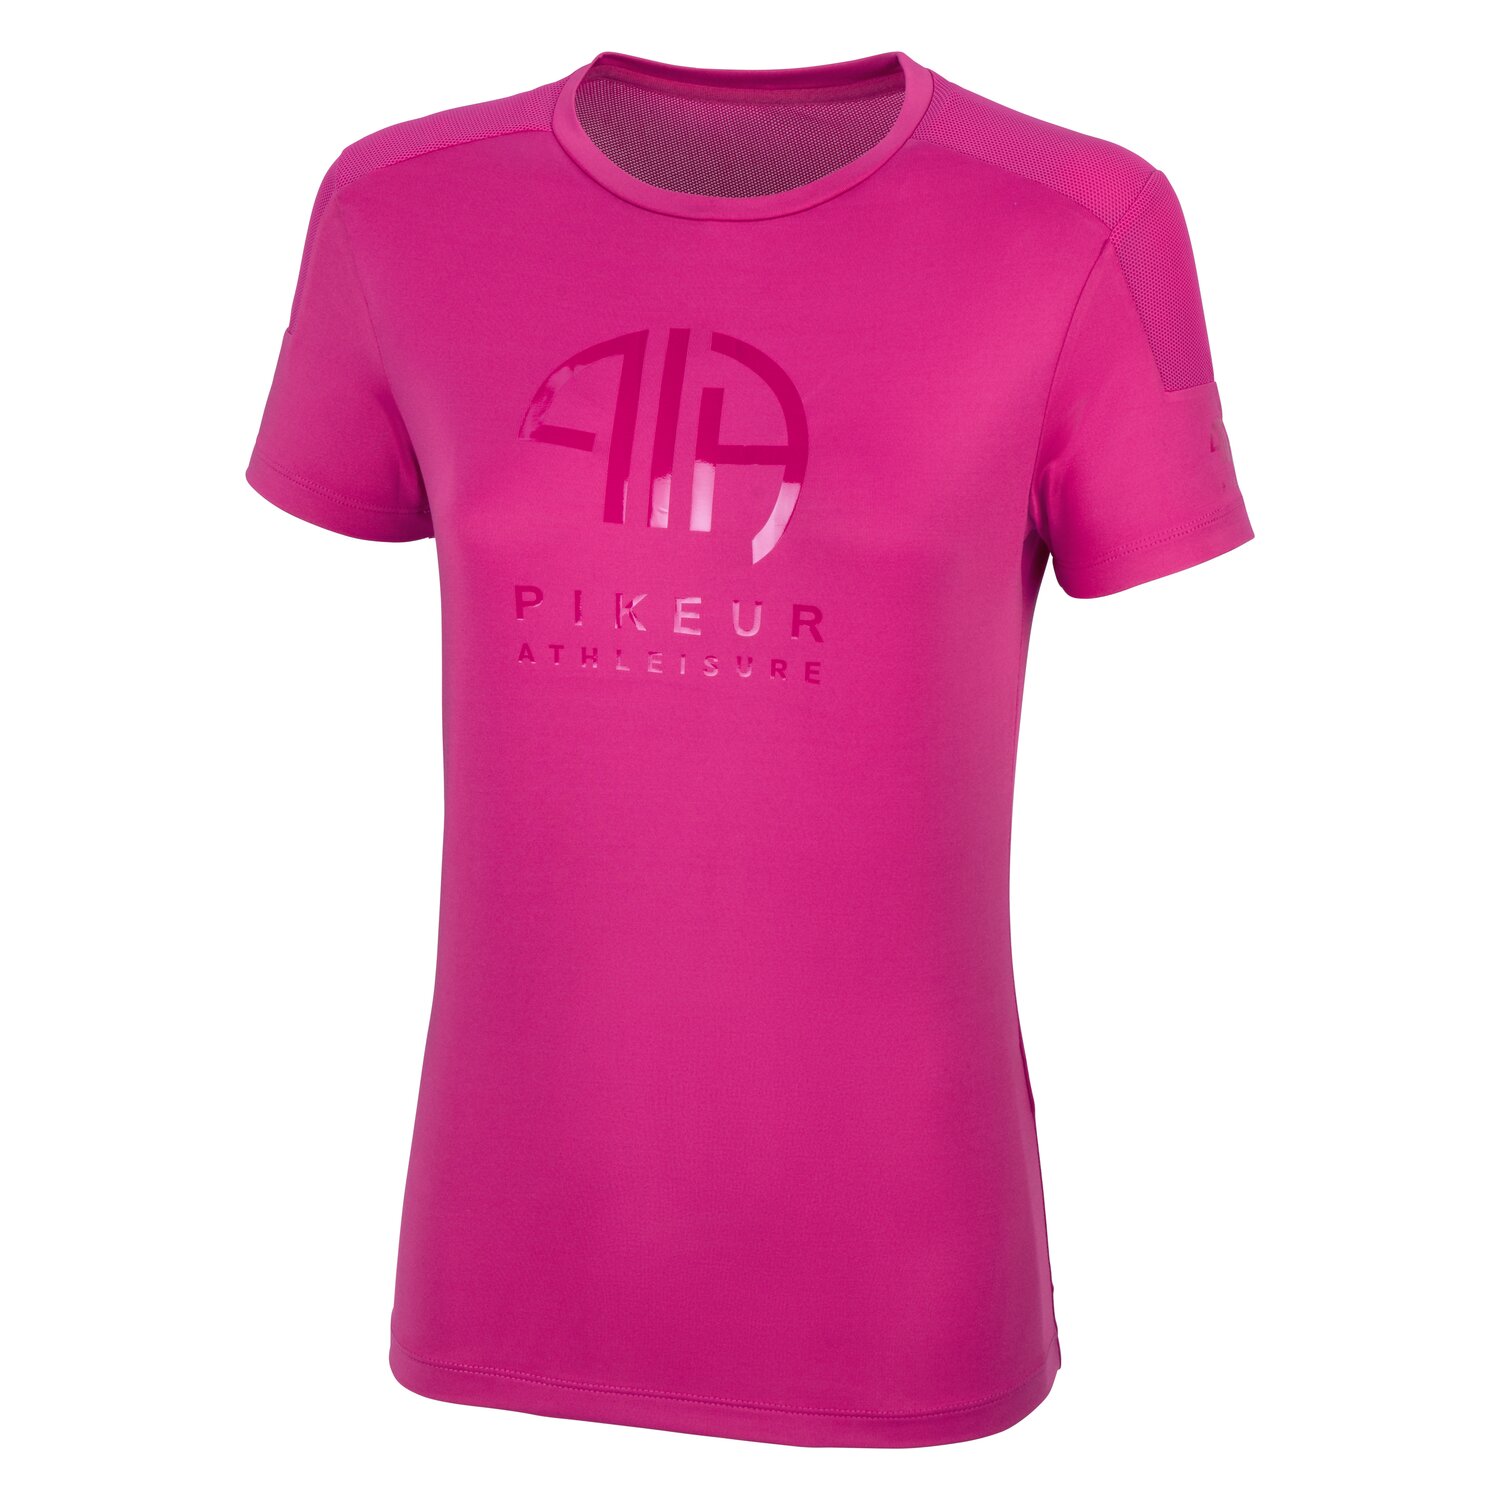 PIKEUR Hybrid-Shirt Trixi Athleisure hot-pink | 42